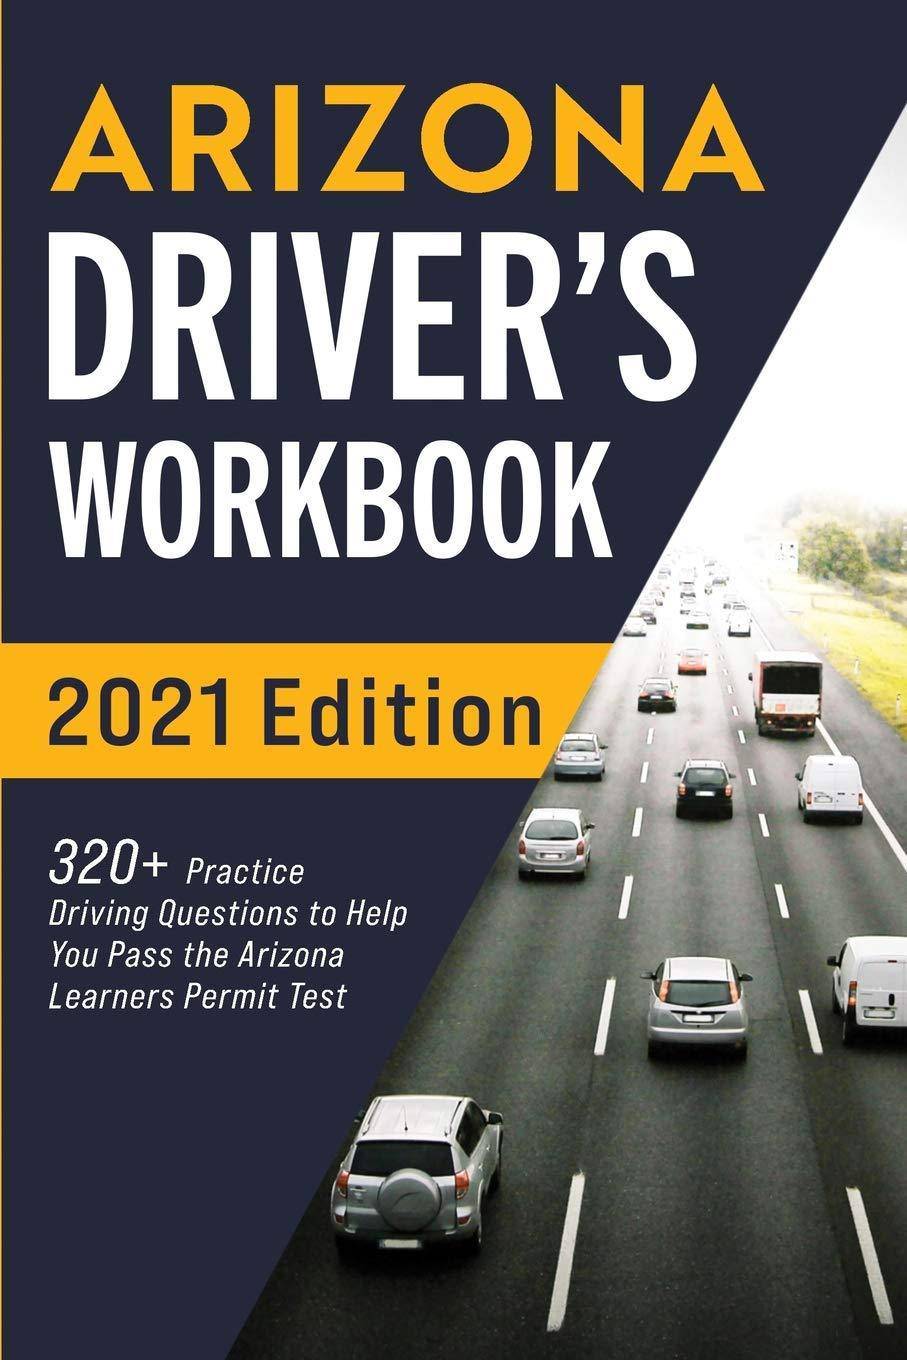 Arizona Driver’s Workbook - SureShot Books Publishing LLC